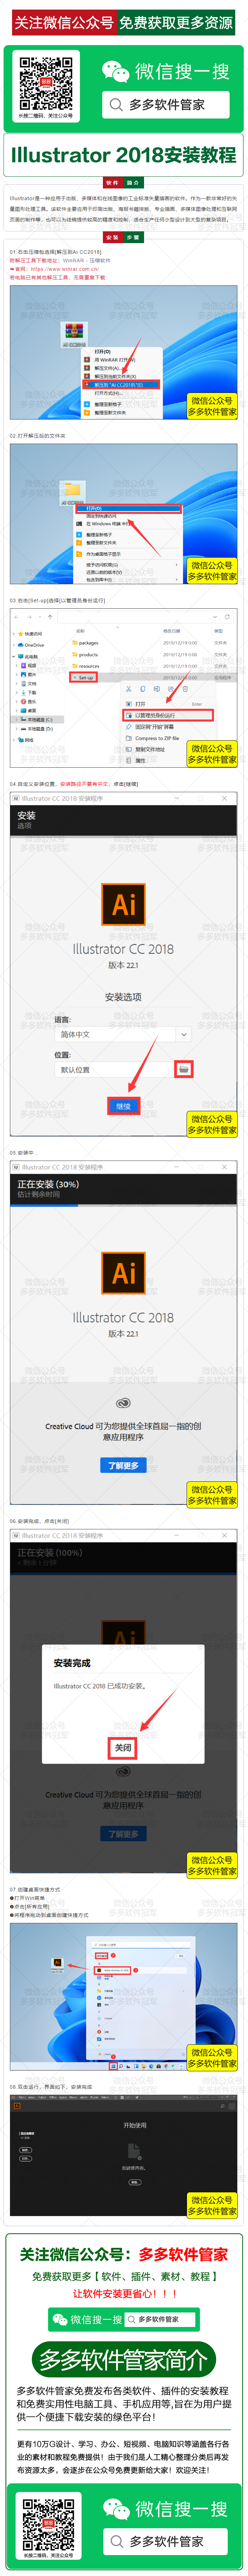 Illustrator CC2018安装步骤.png